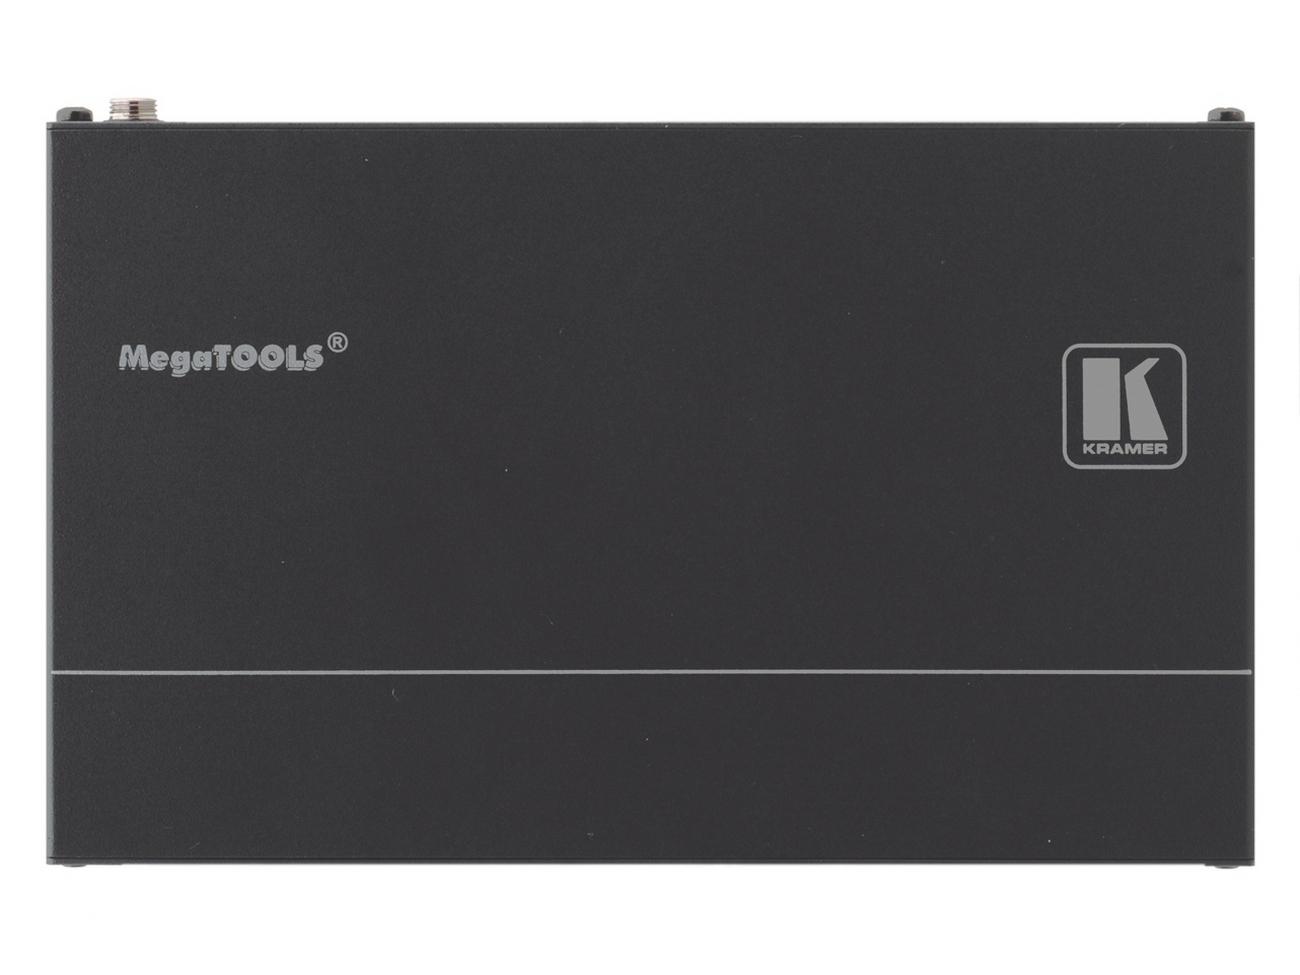 TP-590TXR HDMI/Audio/USB/Bidirect RS-232 over HDBaseT 2.0 Extender (Transmitter) by Kramer